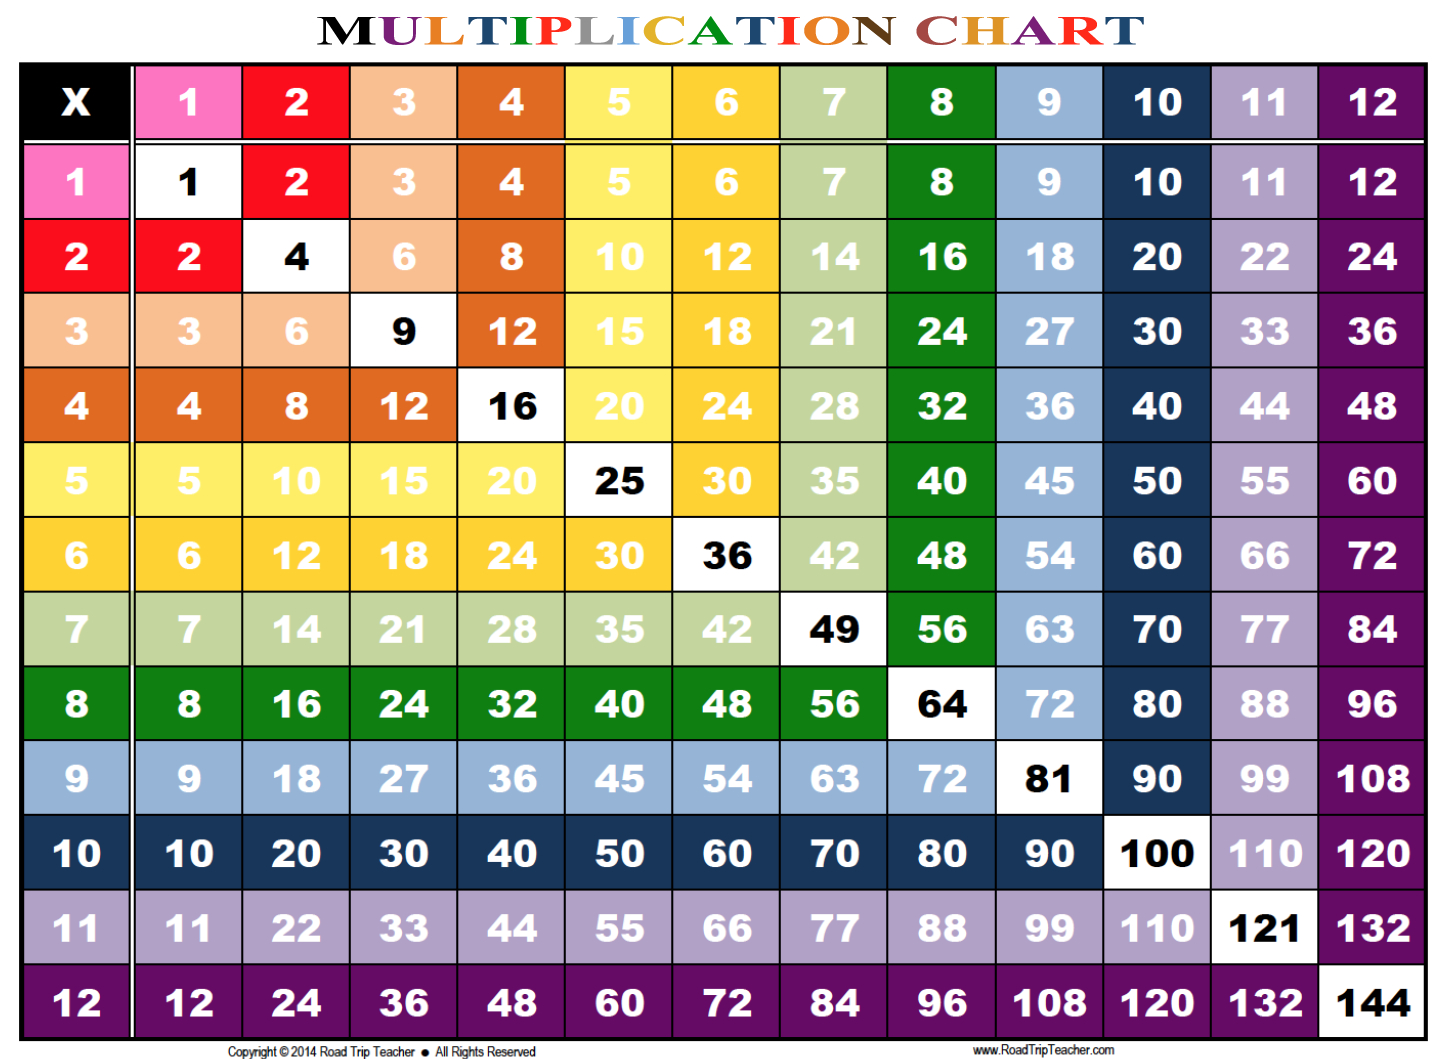 Multiplication Chart 1 12 Printable | Multiplication Chart pertaining to Free Printable Large Multiplication Chart